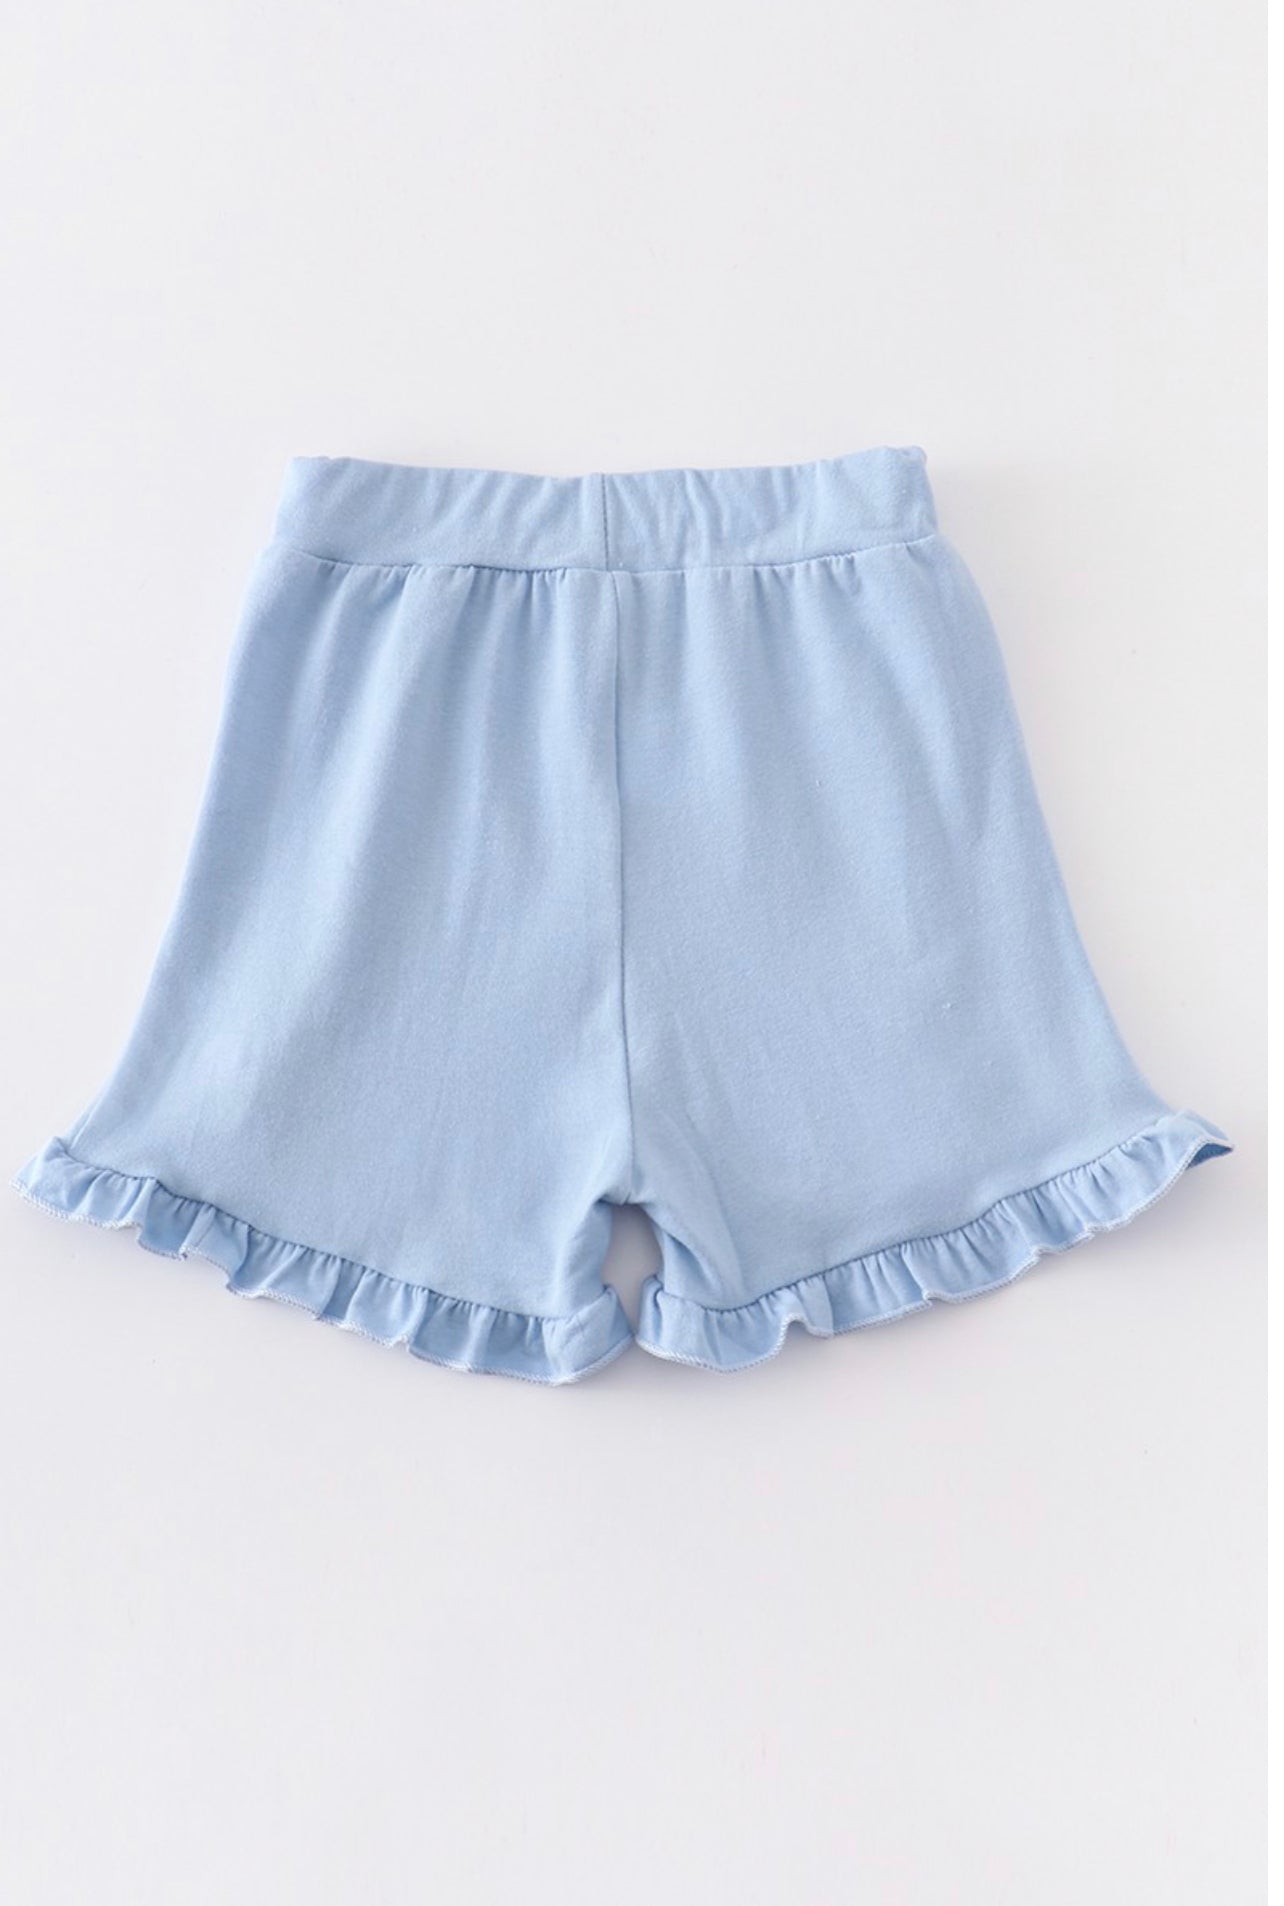 Blue Ruffle Shorts